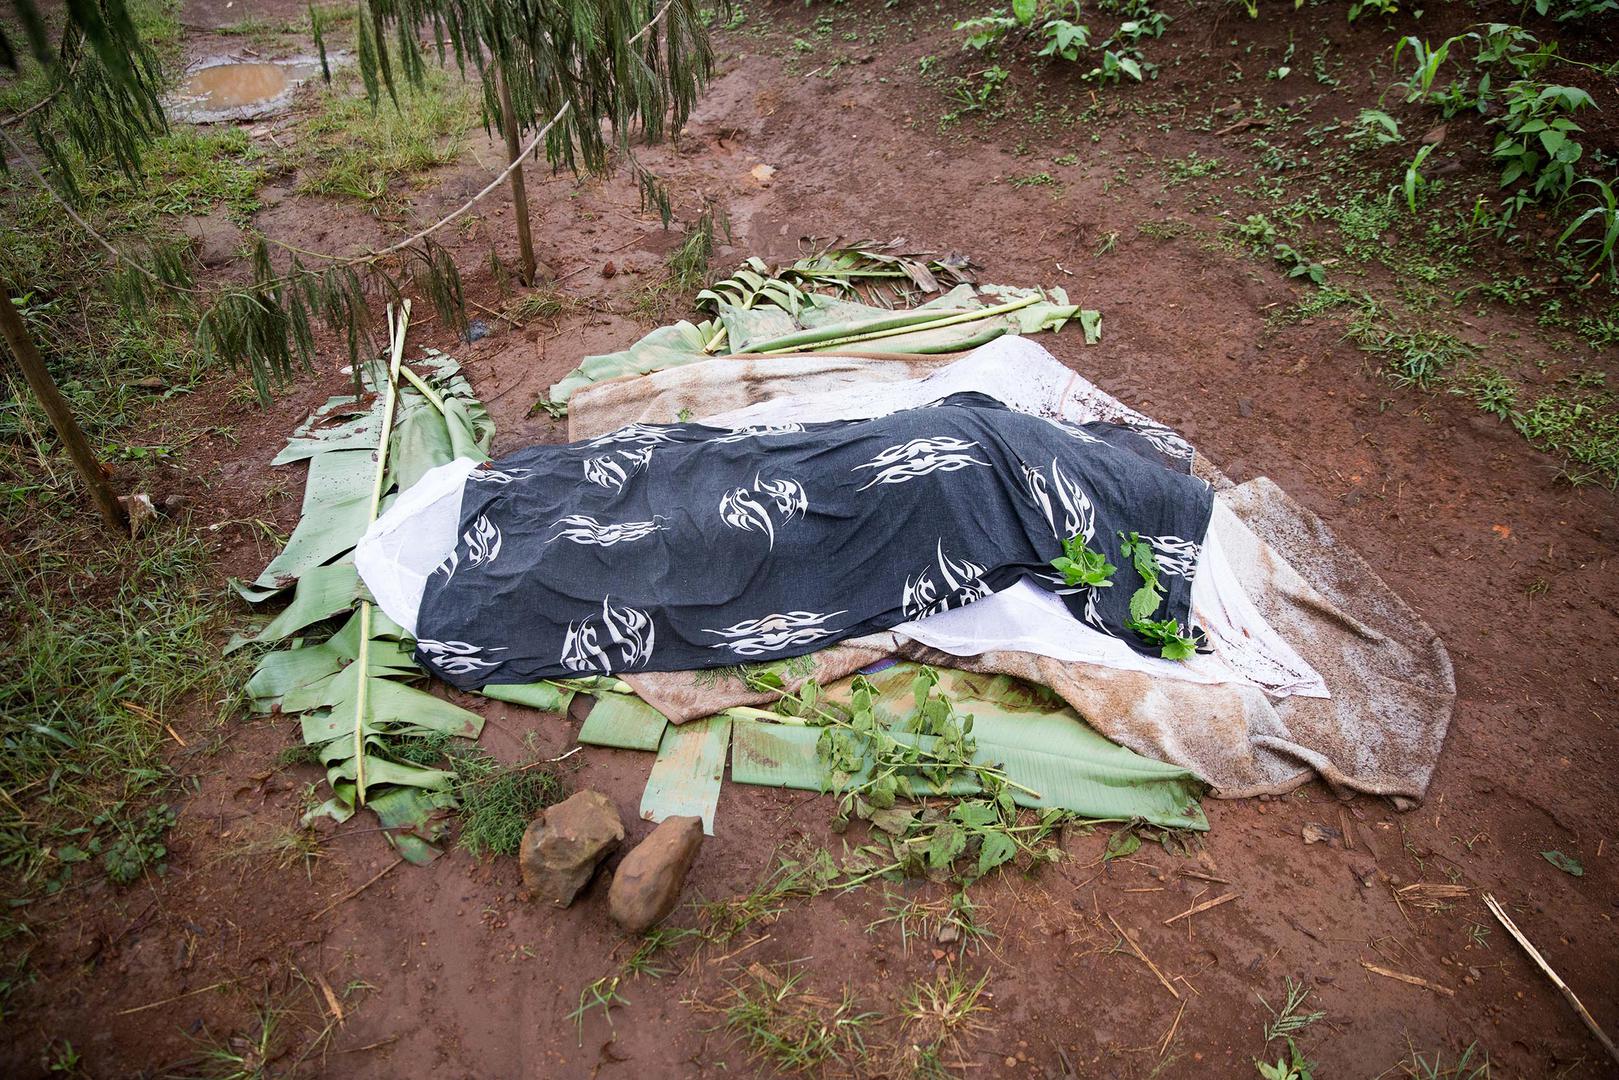 Cameroon: Killings, Destruction in Anglophone Regions